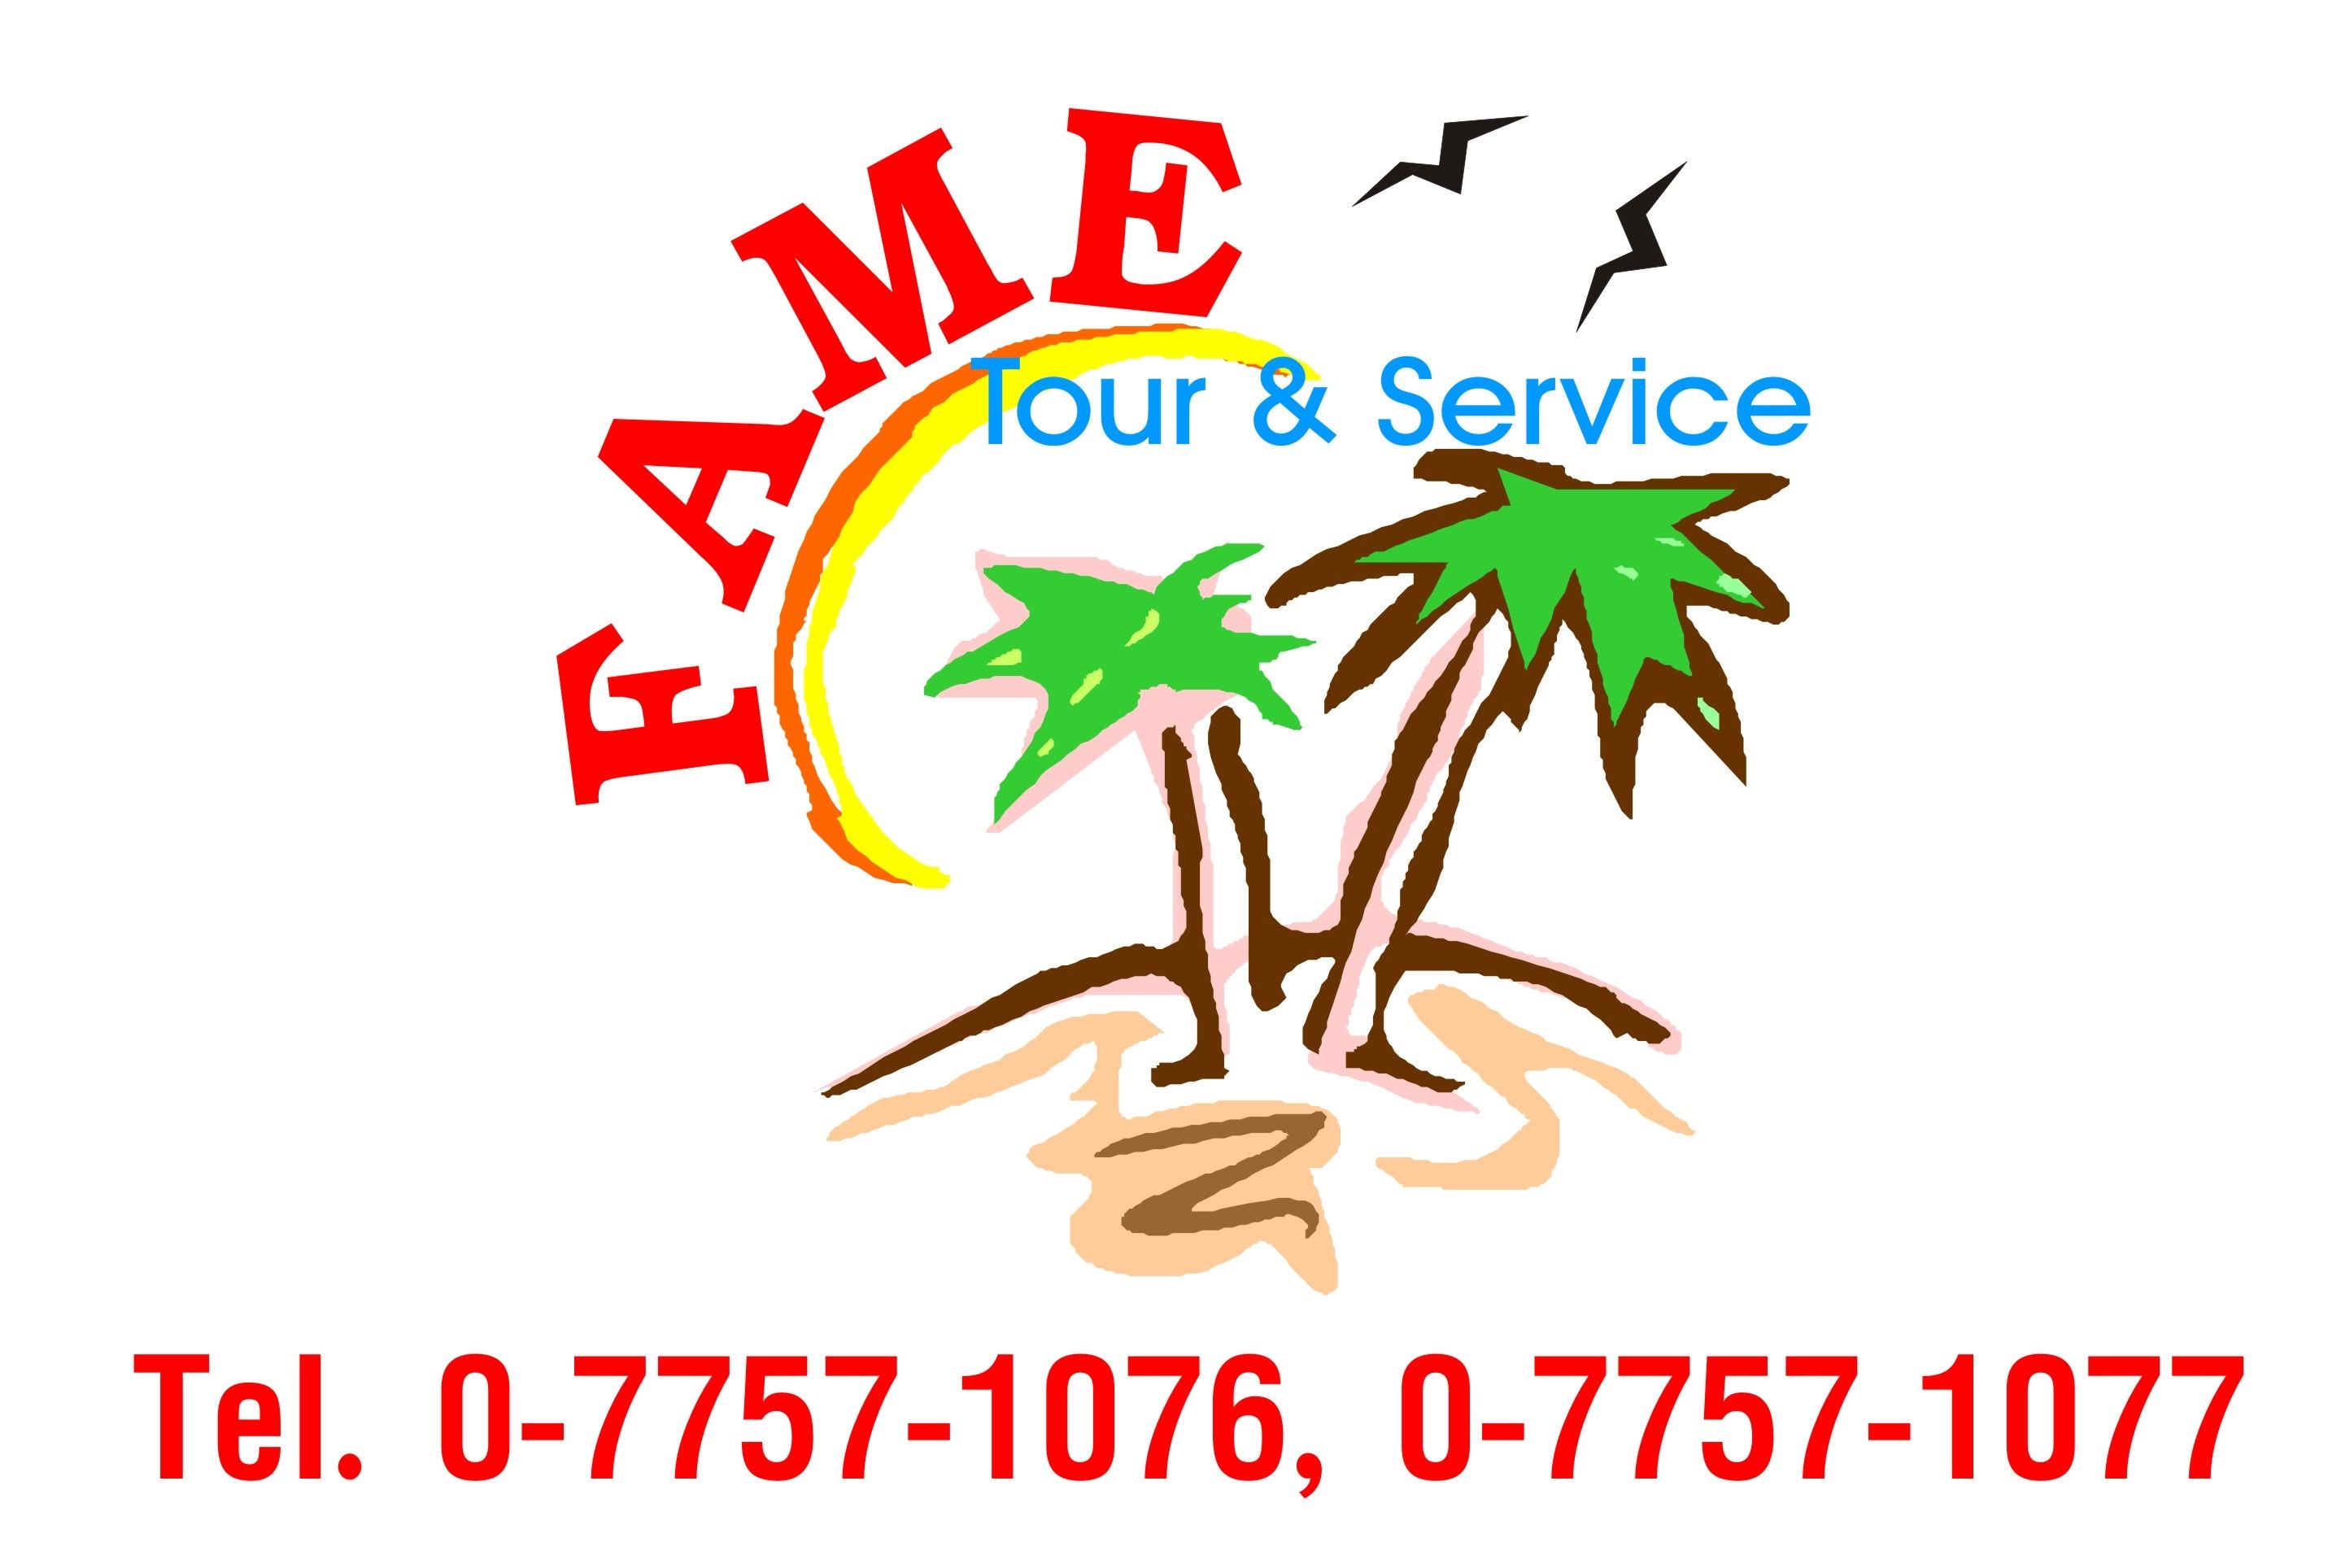 Fame Tours & Services